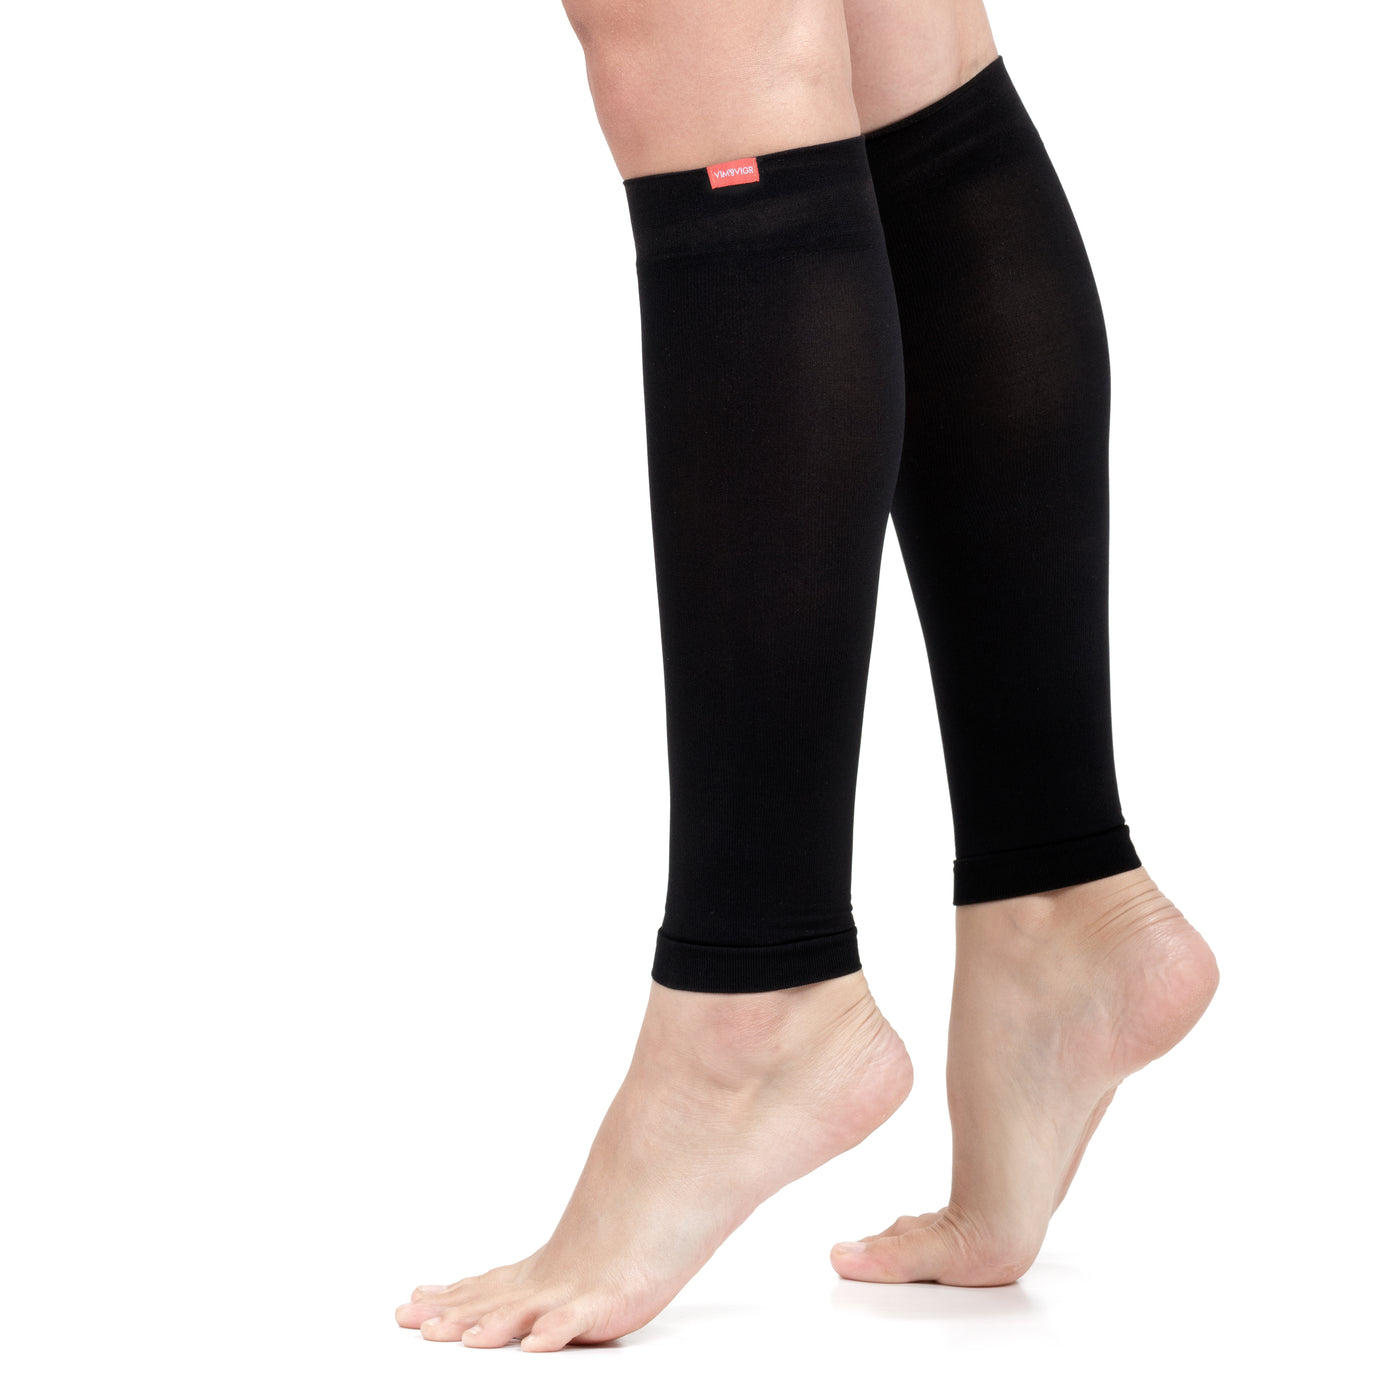 15-20 mmHg: Solid Black Compression Leg Sleeves (Nylon) for women